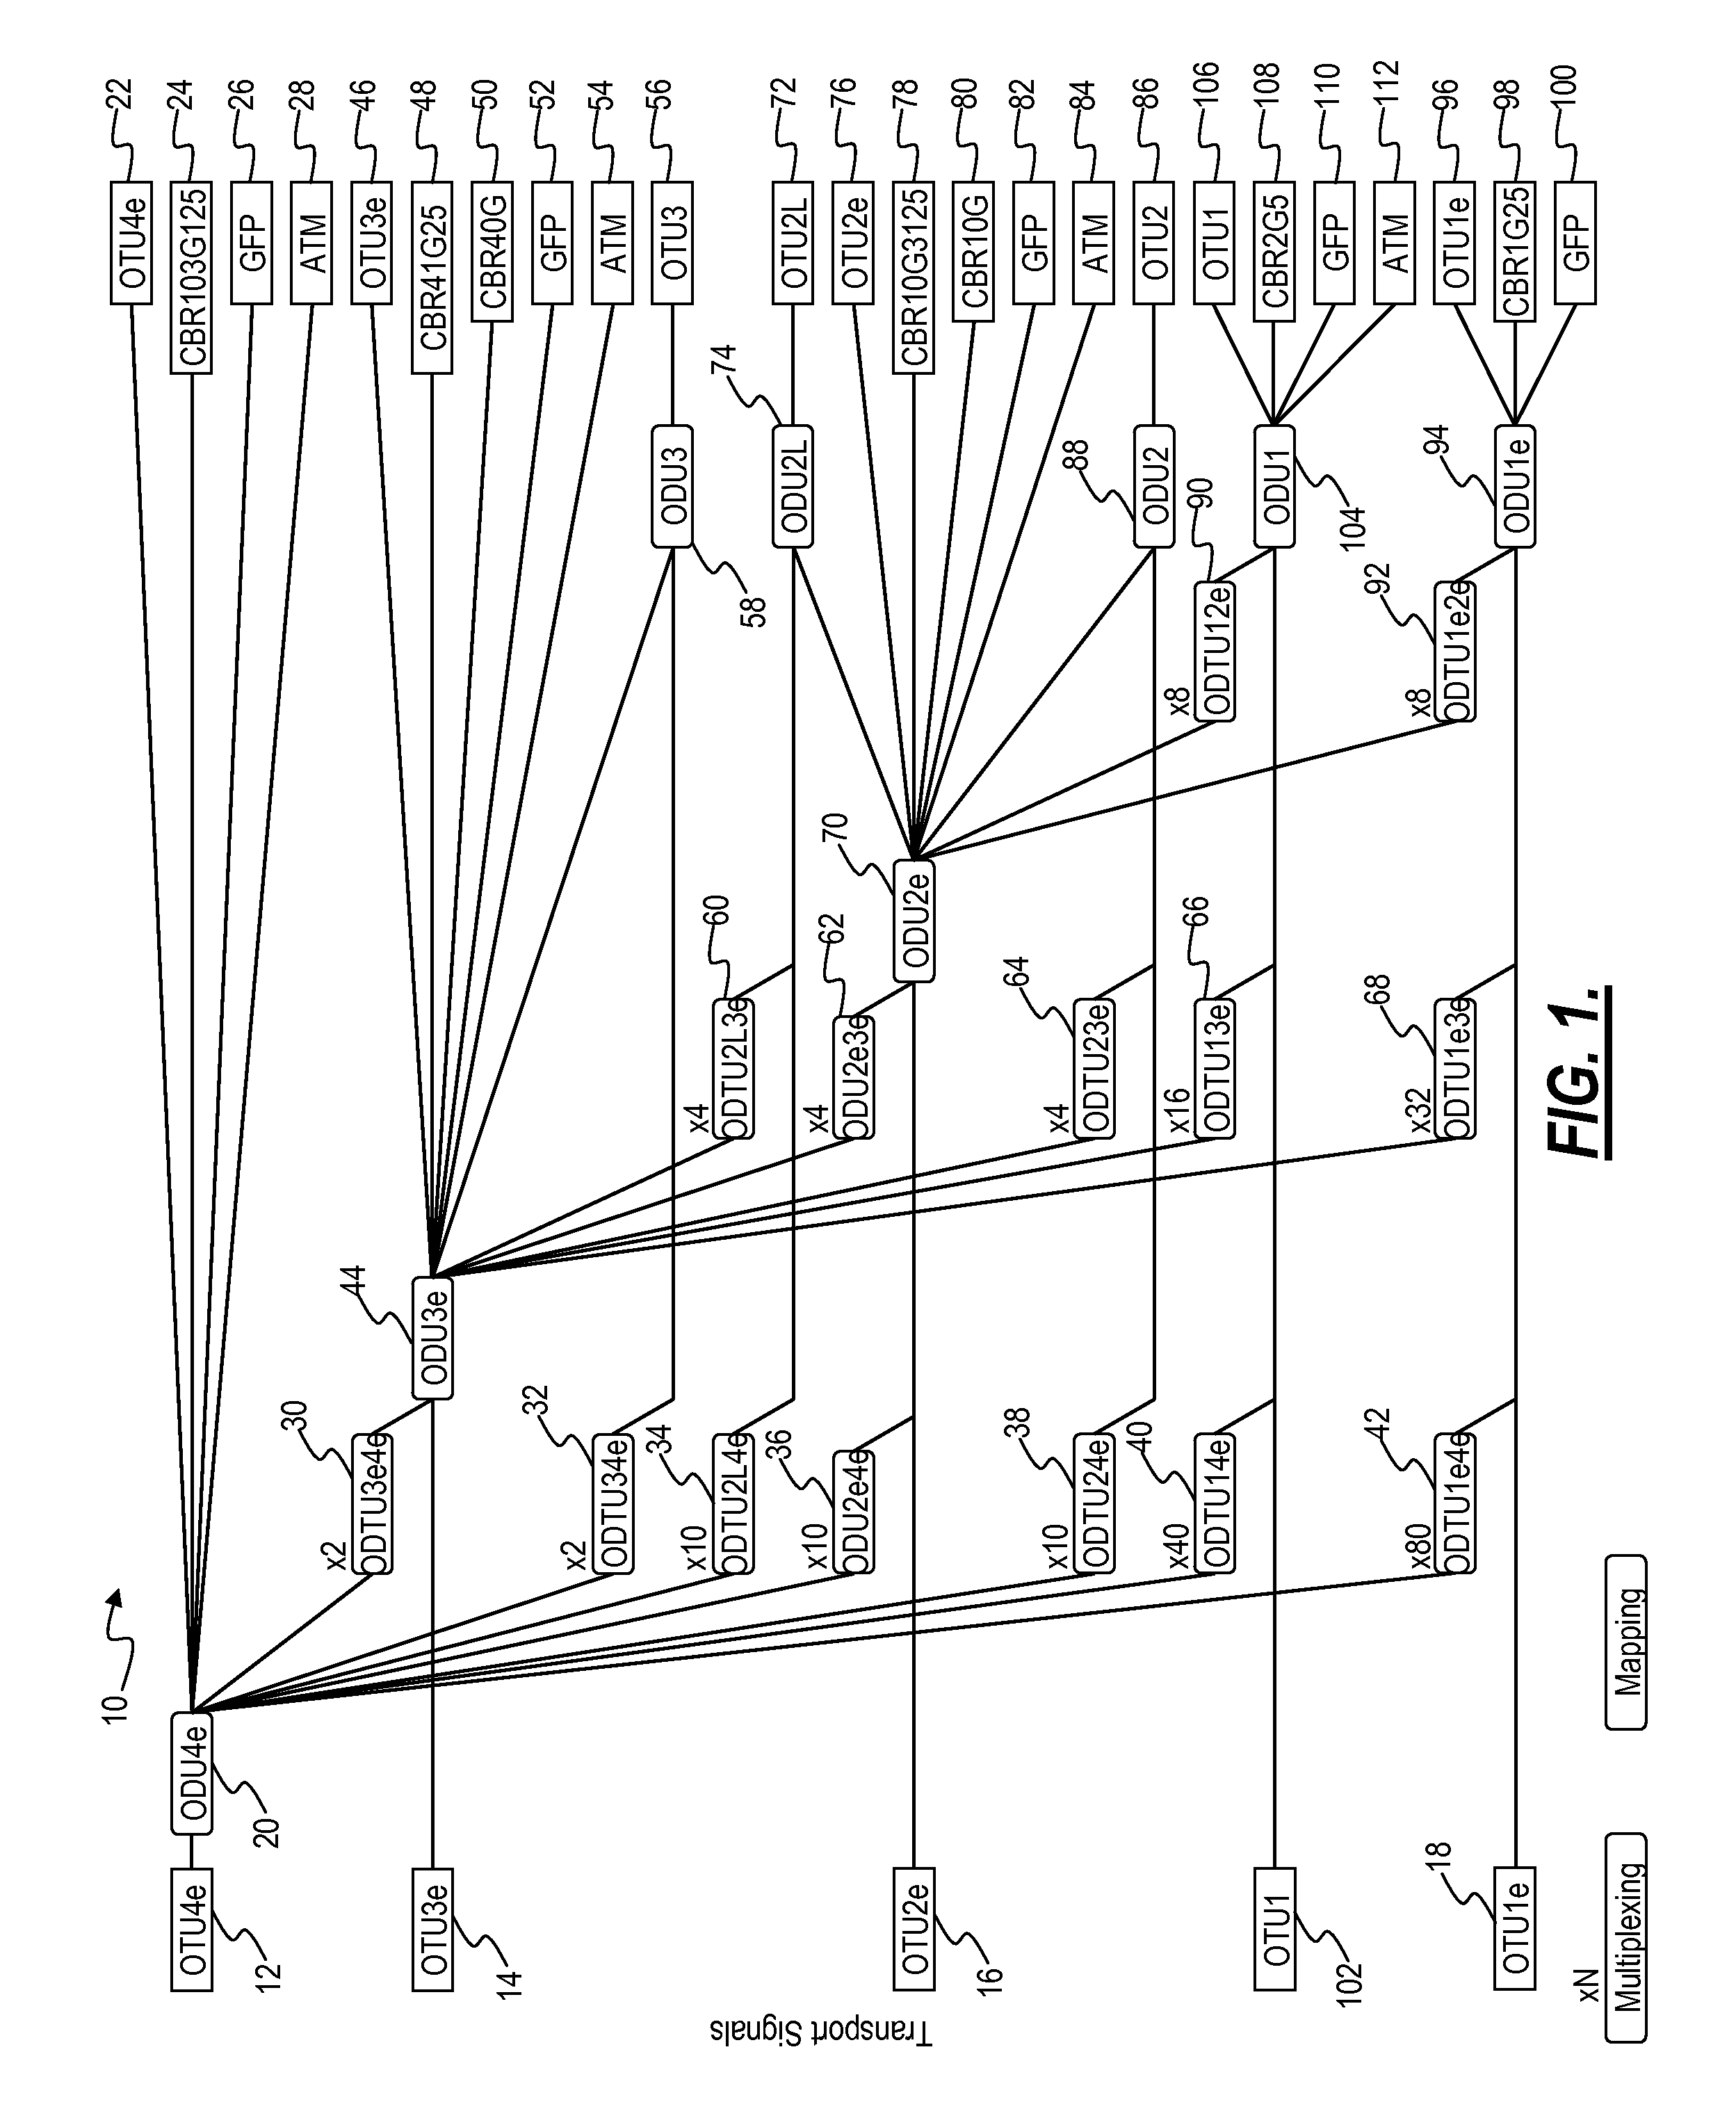 Optical transport network hierarchy for full transparent transport of datacom and telecom signals